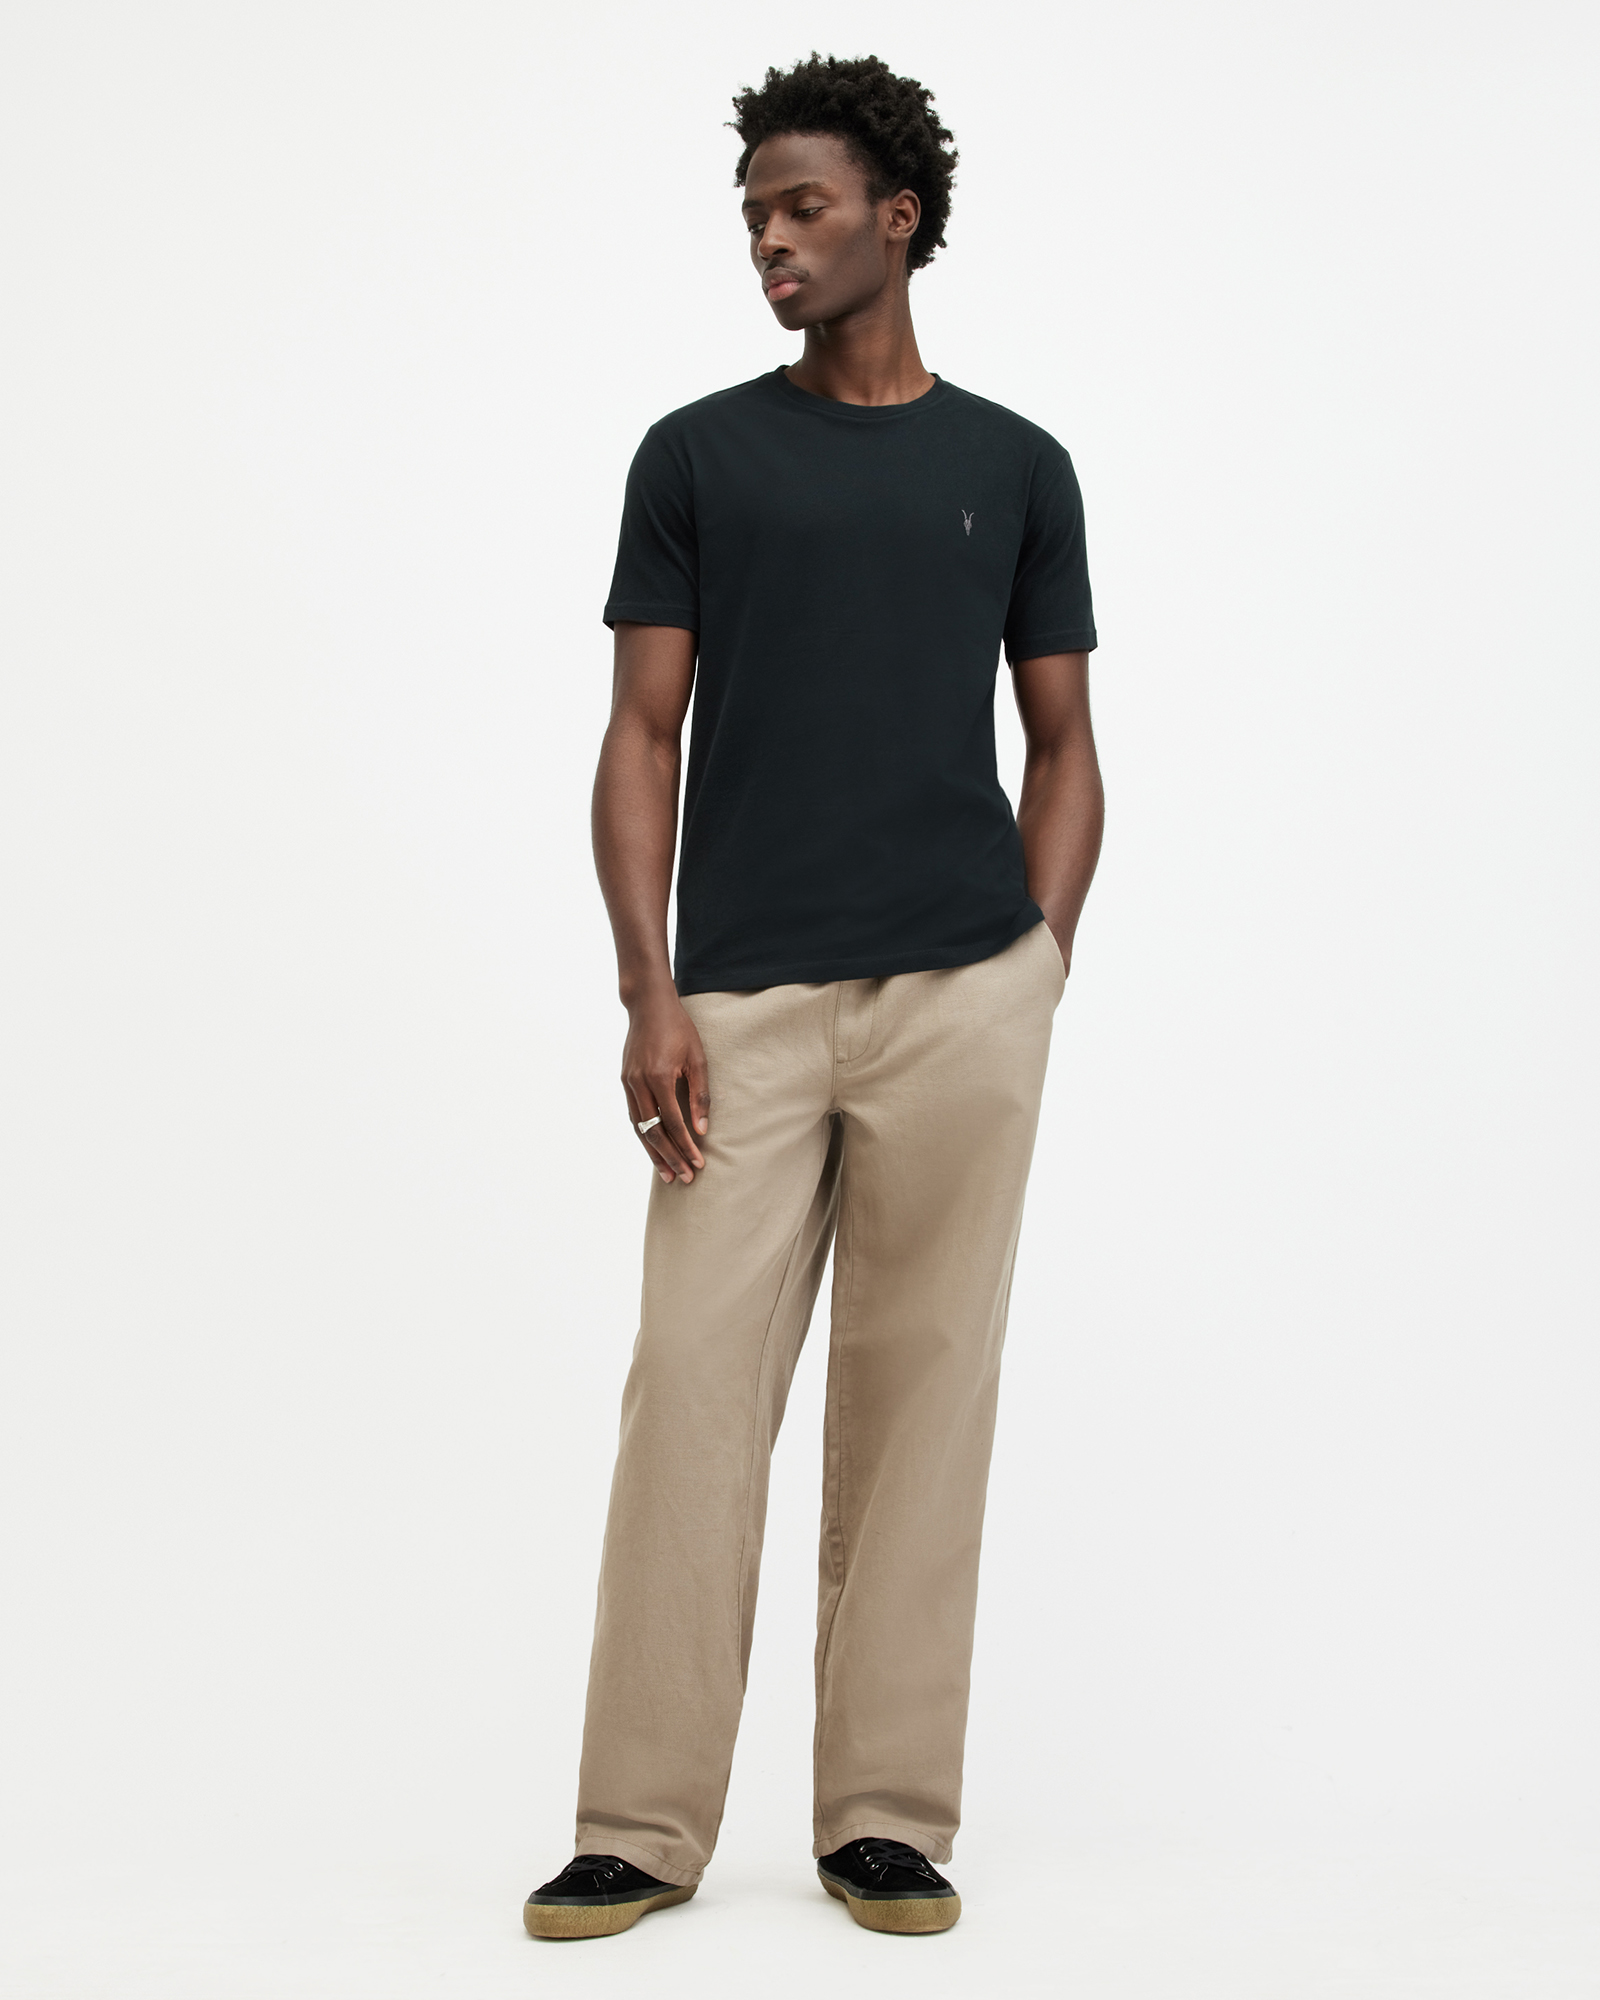 AllSaints Men's Regular Fit Brace Tonic Short Sleeve Crew T-Shirt, Black, Size: XL